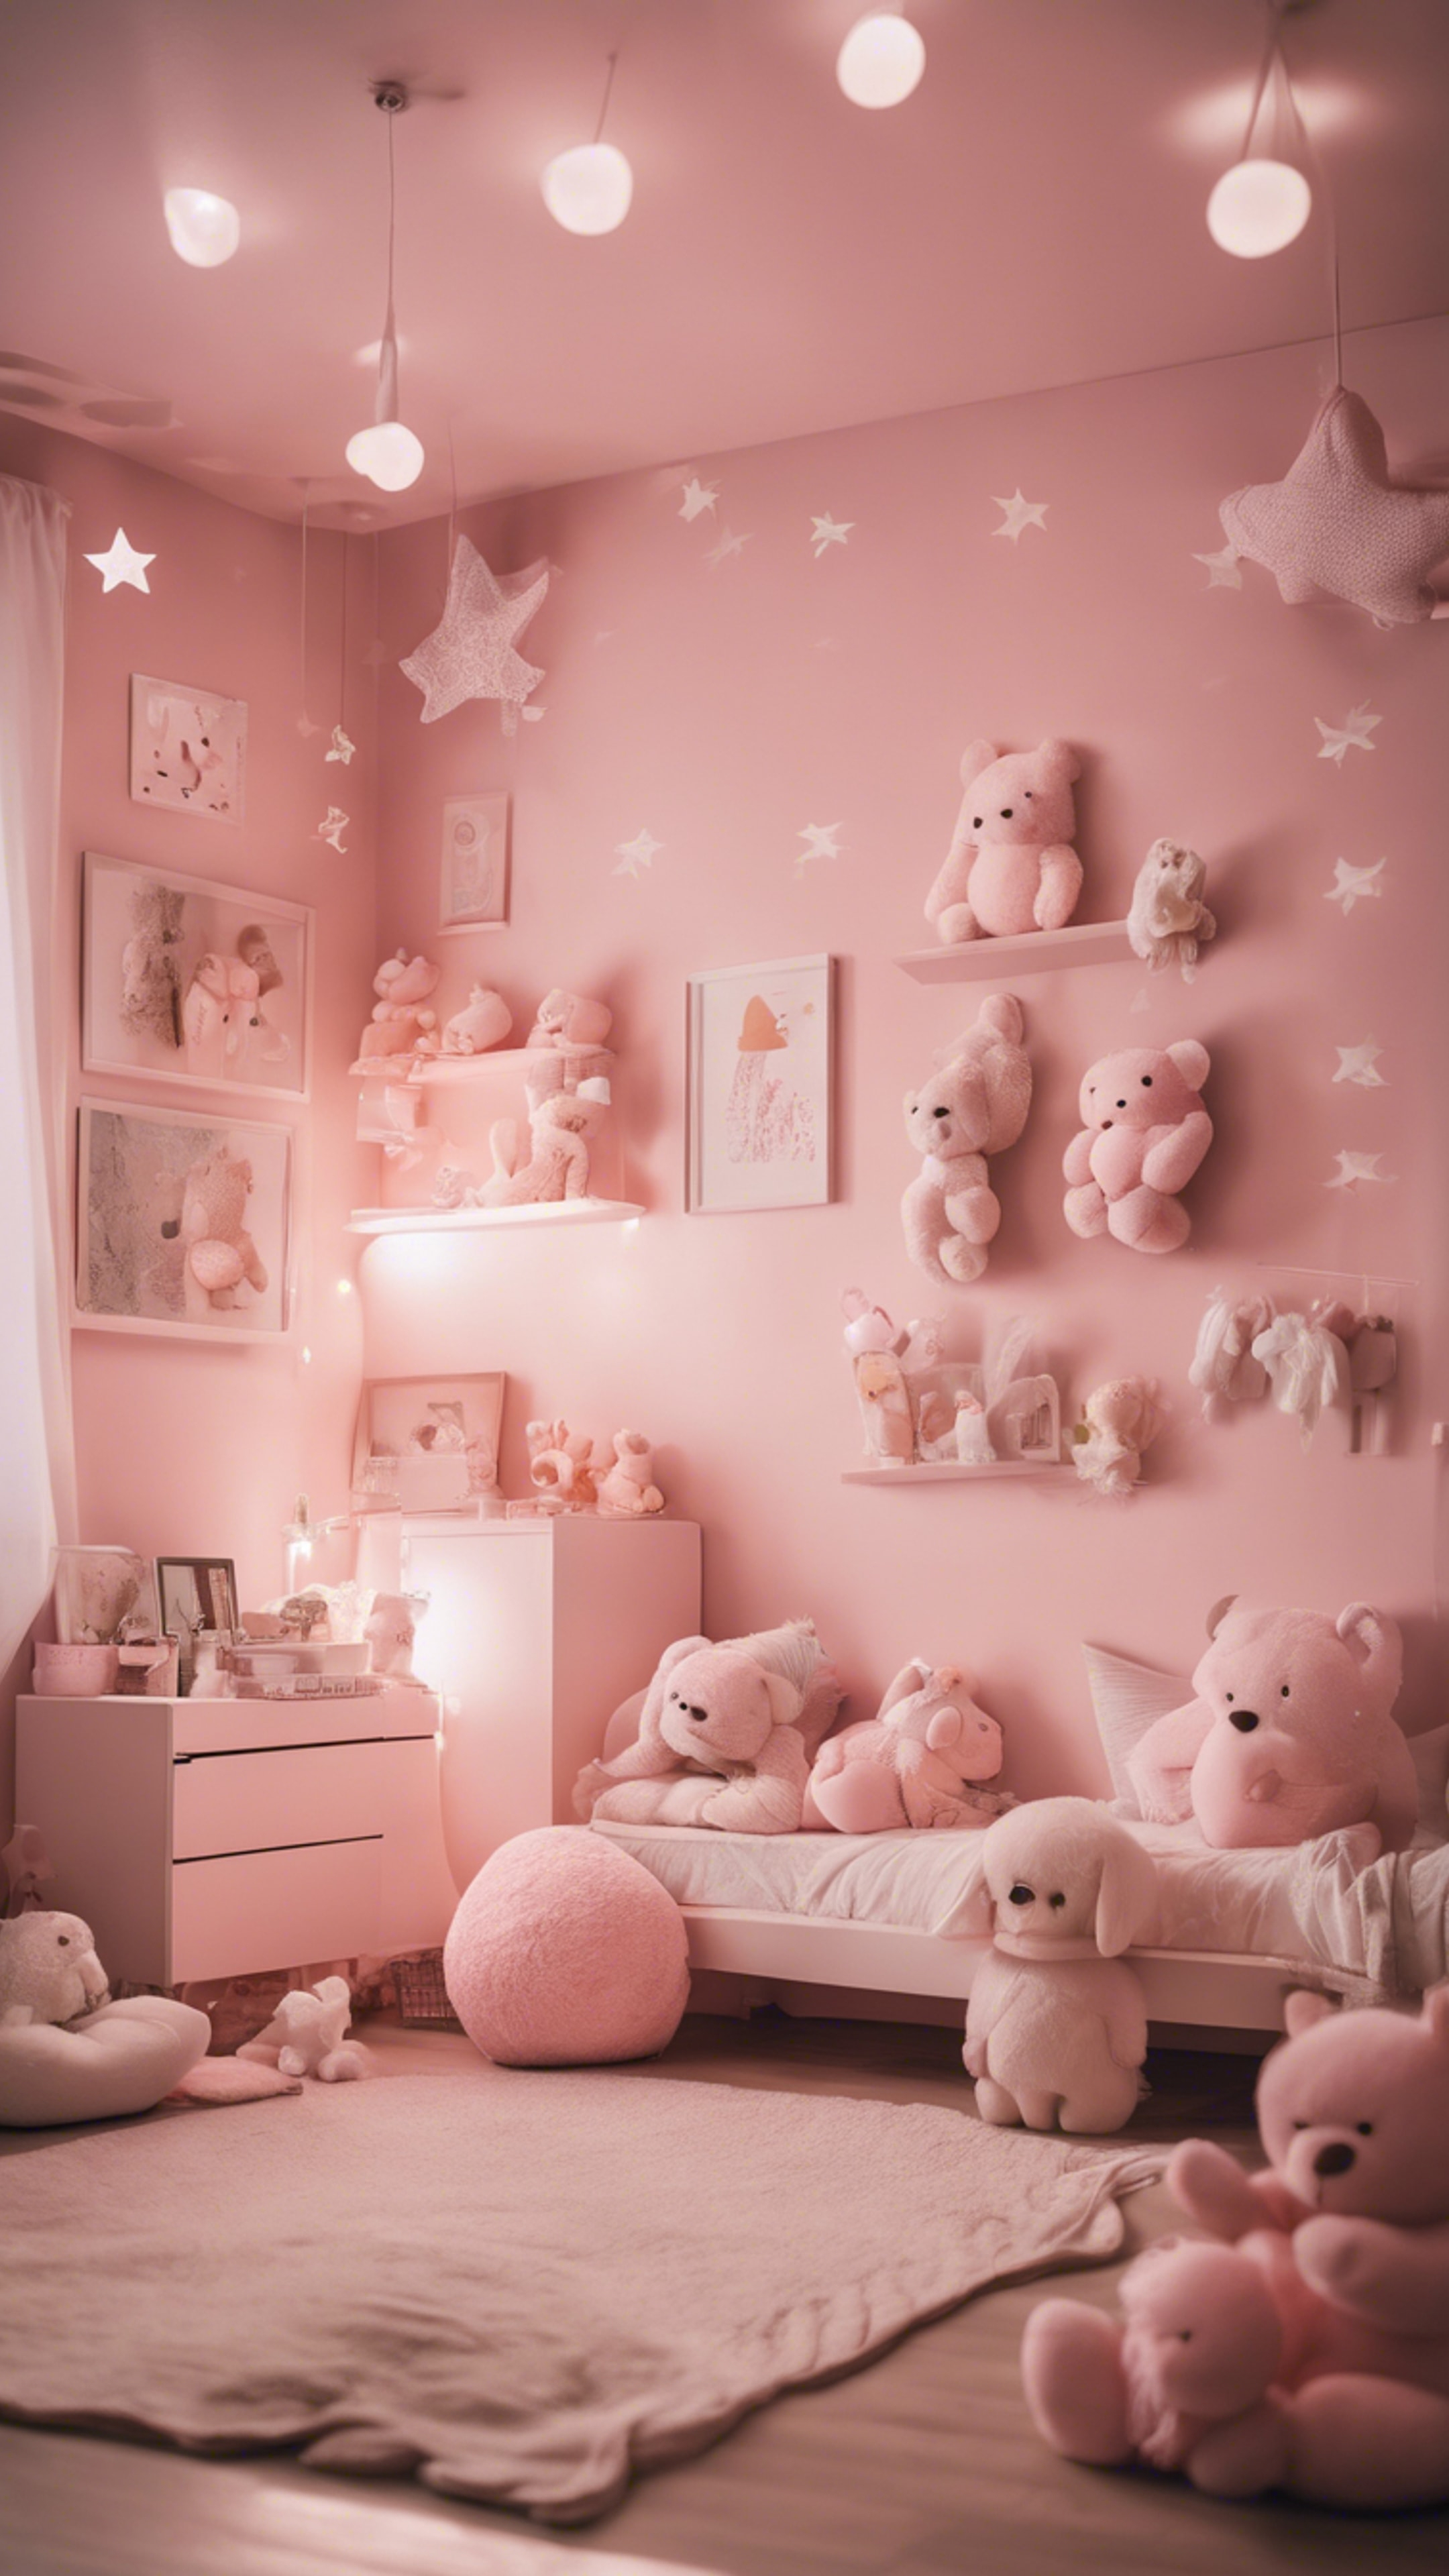 A child's bedroom designed in light pink Kawaii theme, with fluffy stuffed animals and stars. Divar kağızı[1c682dae9a5849159ddf]